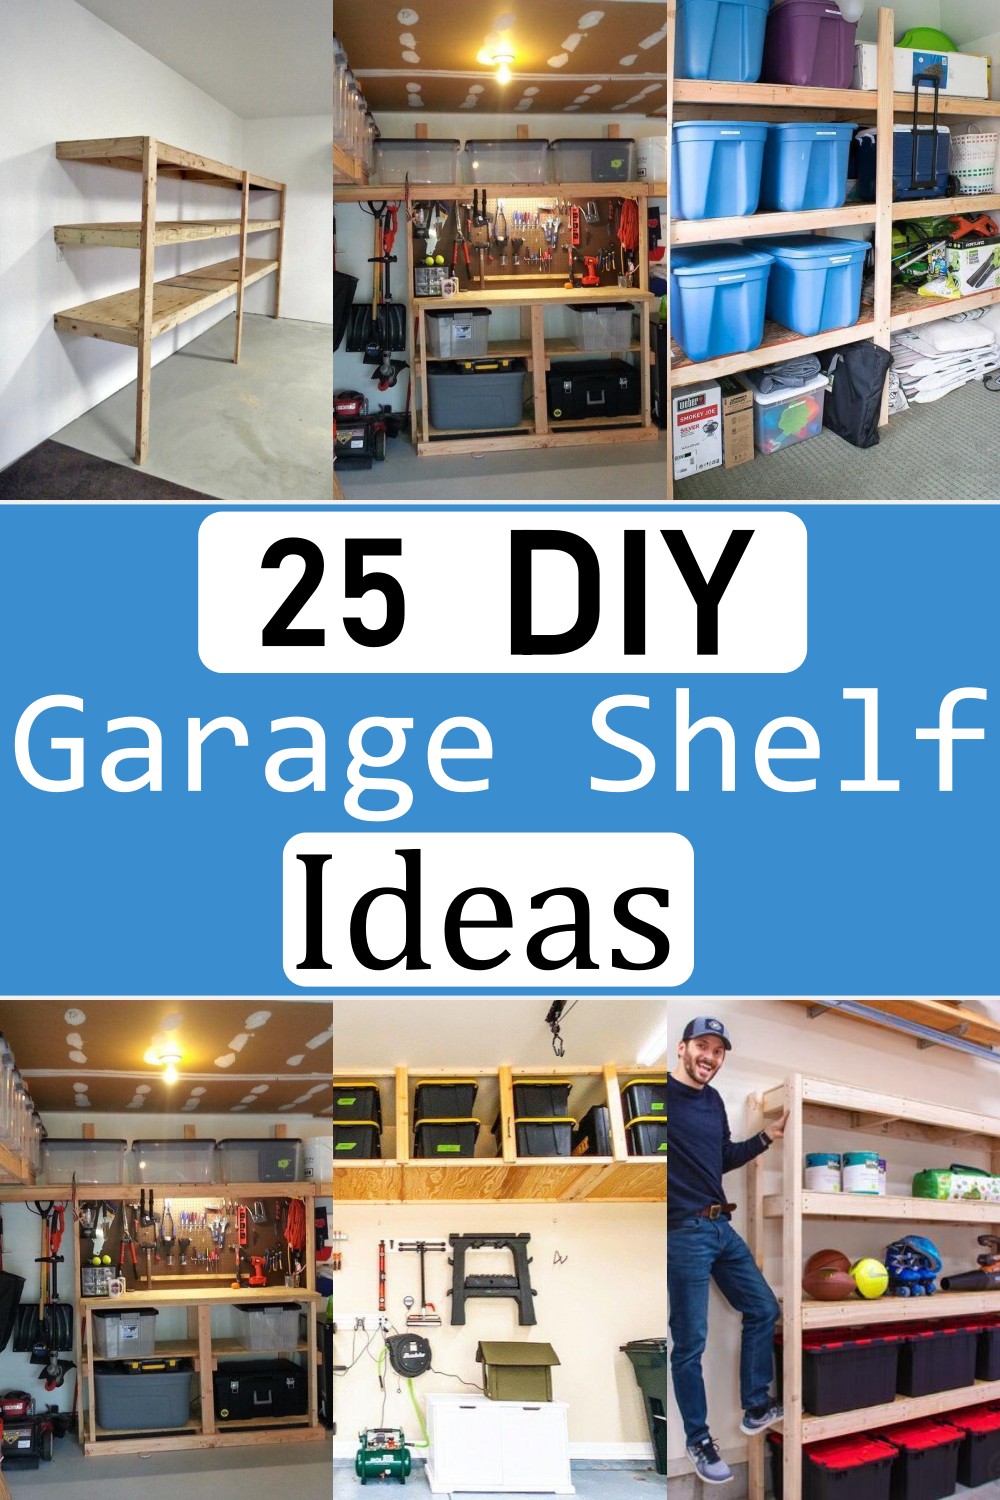  Garage Shelf